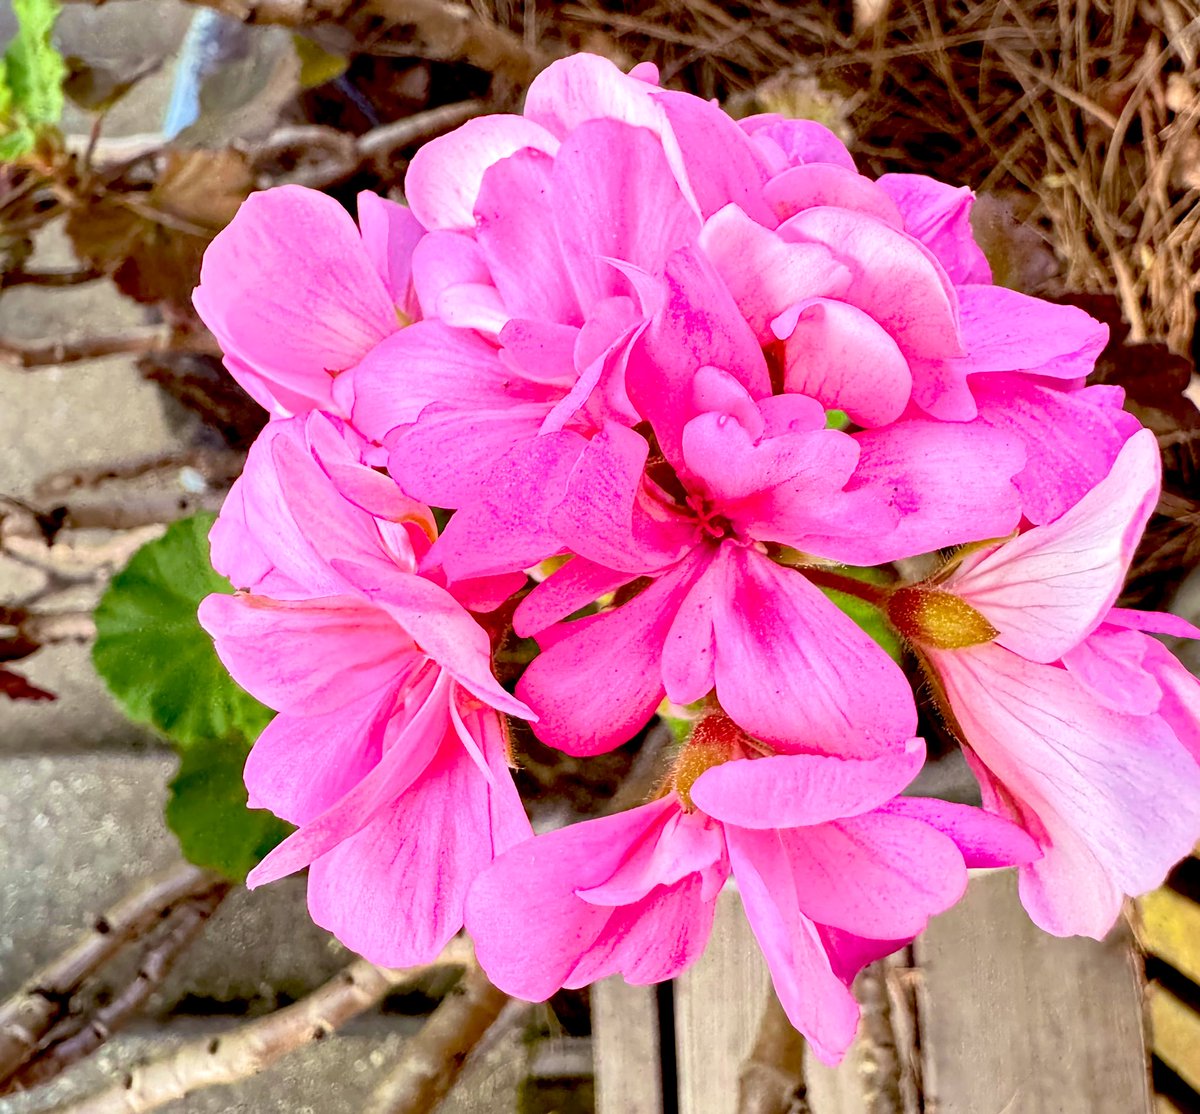 @suziday123 @SashaEats @BalboaPark @SDMA Happy #FlowerFriday Suzi from my backyard to you
#FridayOnFlowers 
🌺🪷💐🌷🌸